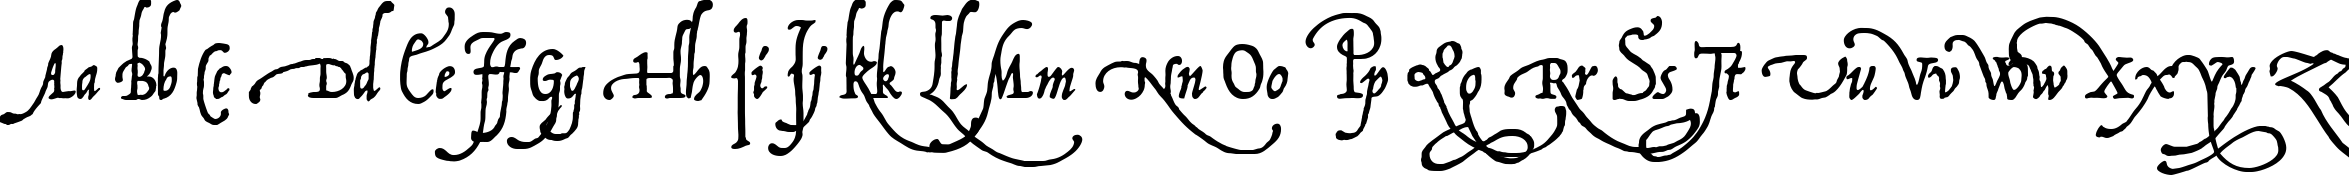 Пример написания английского алфавита шрифтом P22 Operina Fiore